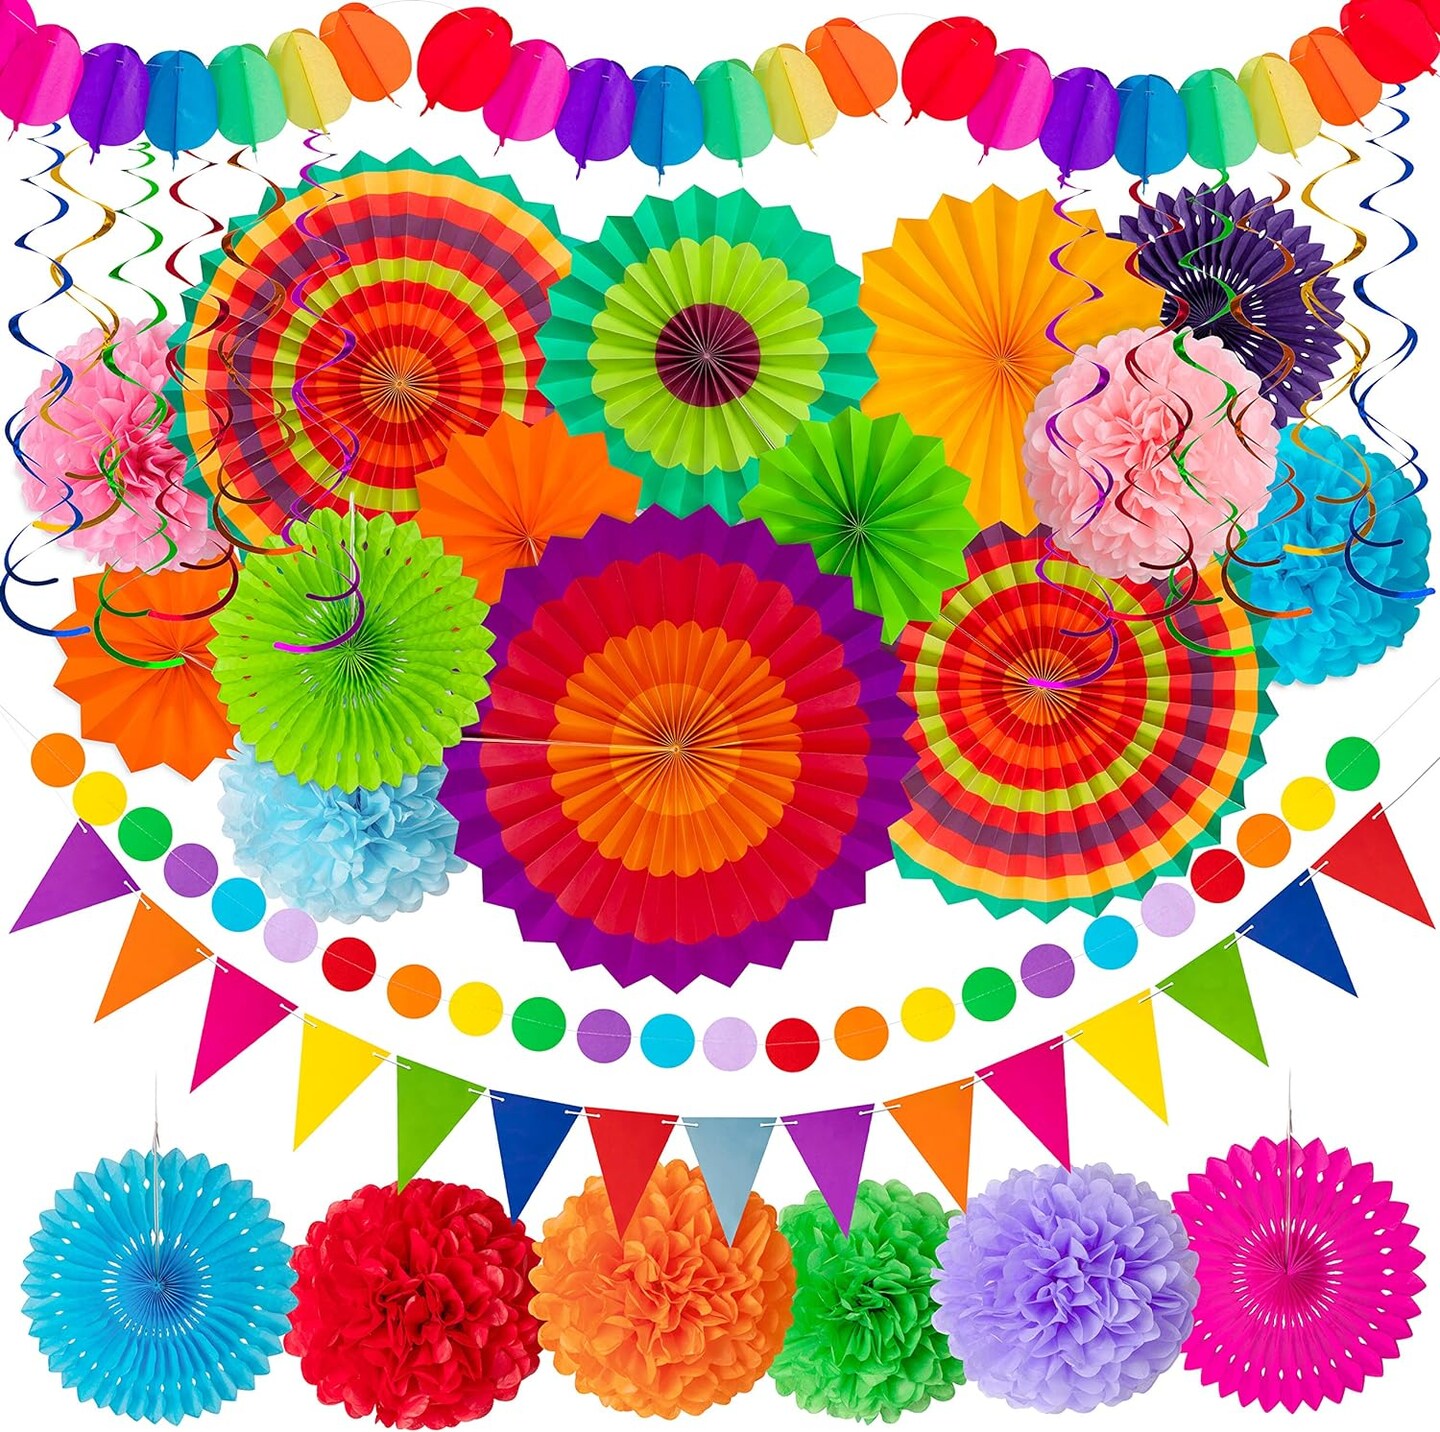 35PCS Fiesta Paper Fan Party Decorations Set - Cinco De Mayo Pom Poms,Pennant,Garland String,Banner,Hanging Swirls Decor Supplies&#xFF08;Multicolored)